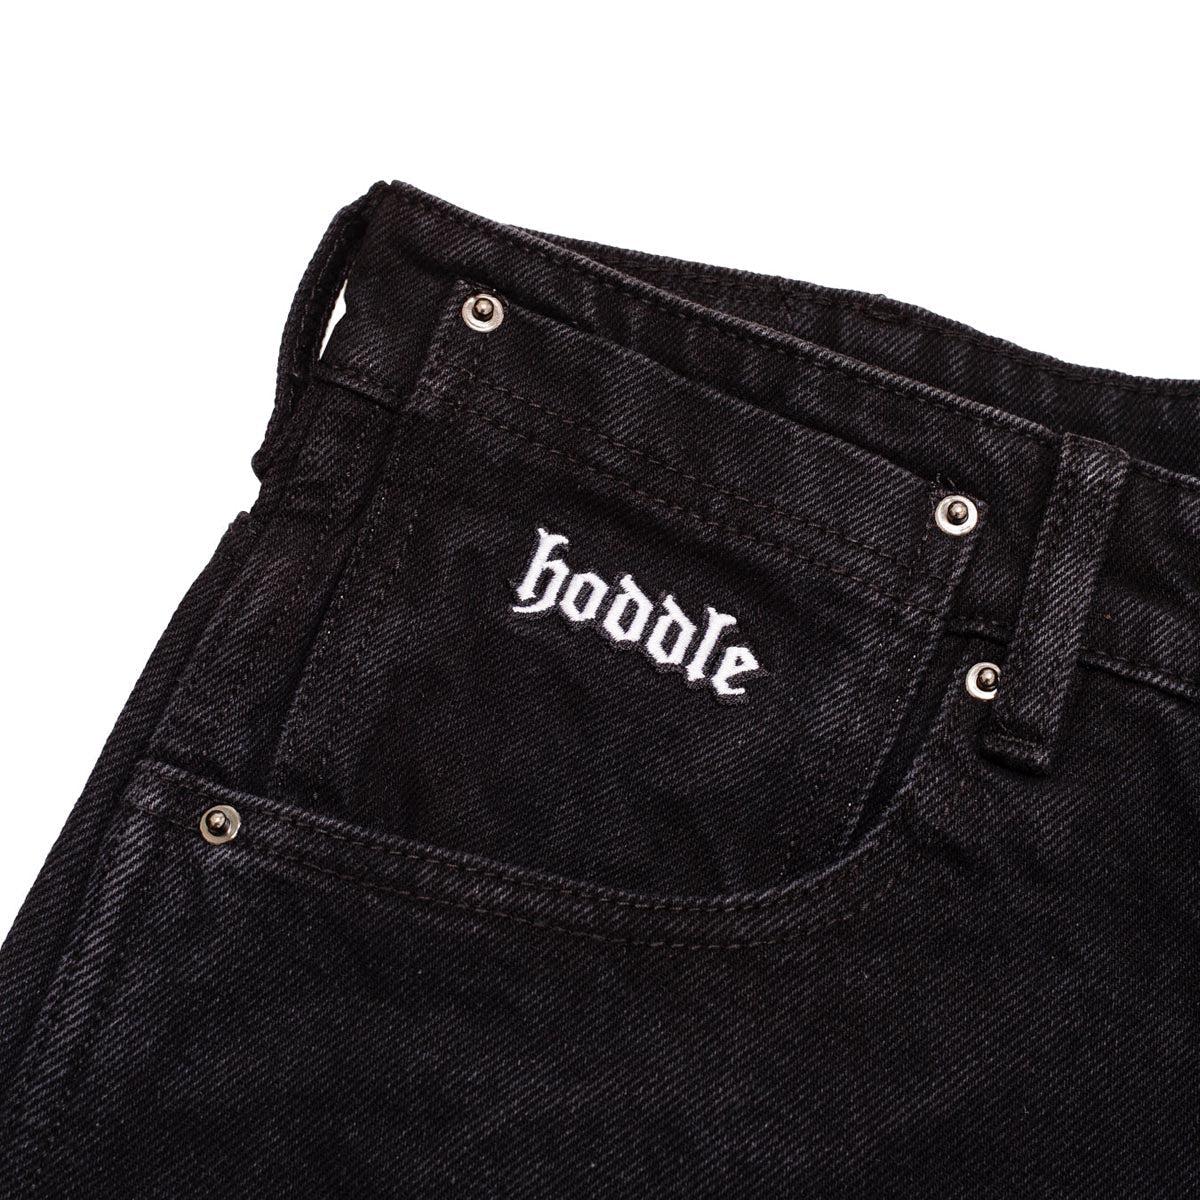 Hoddle 16o Denim Ranger Jeans - Black/Black image 4